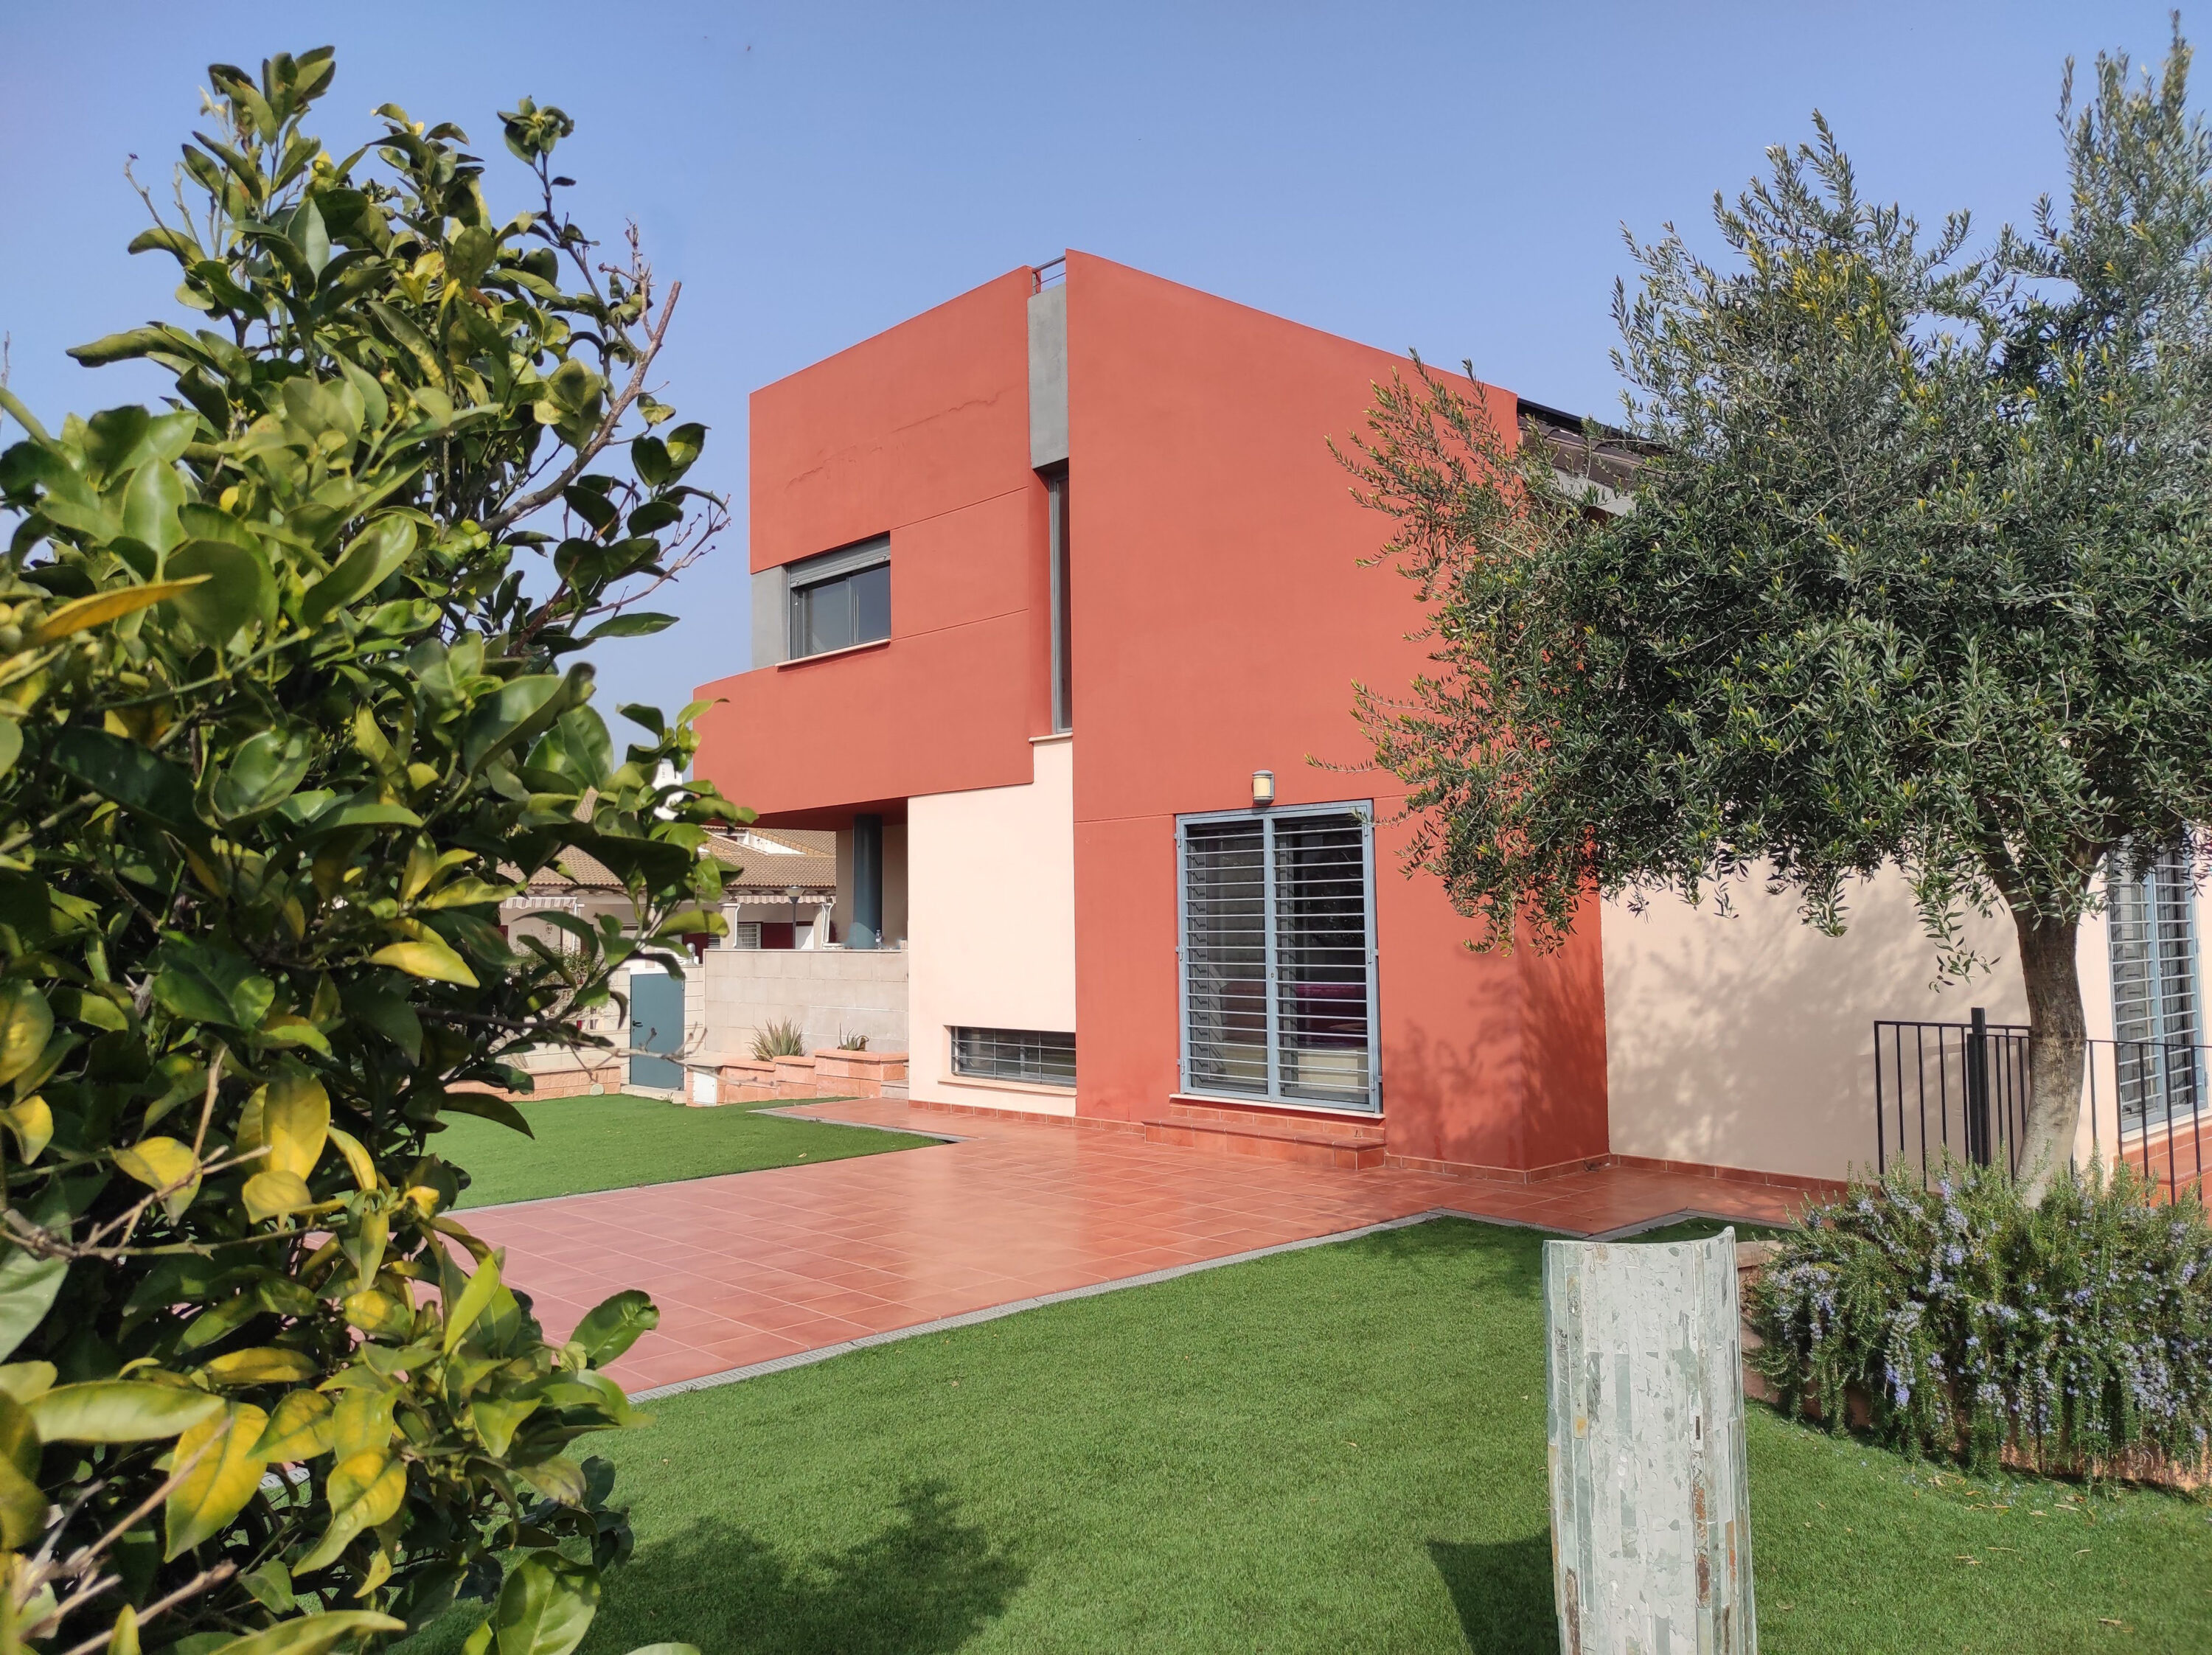 Villa for rent in Almardà beach – Canet d’en Berenguer (Sagunto) – Ref. 001354